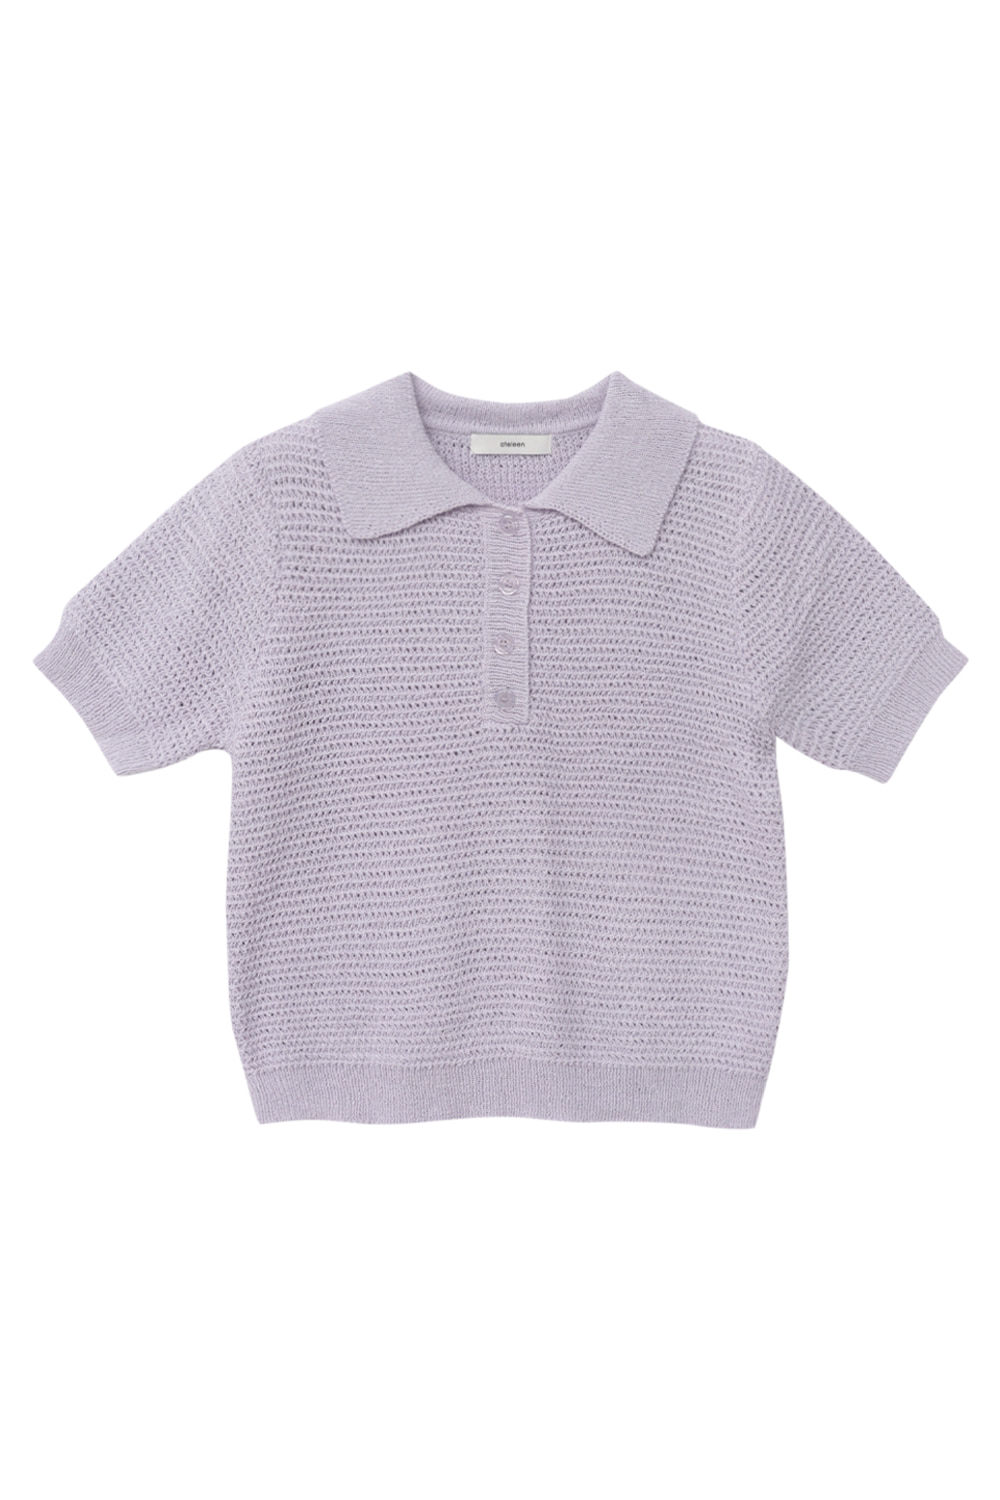 Classic Collar Knit Top Short Sleeve (Purple)